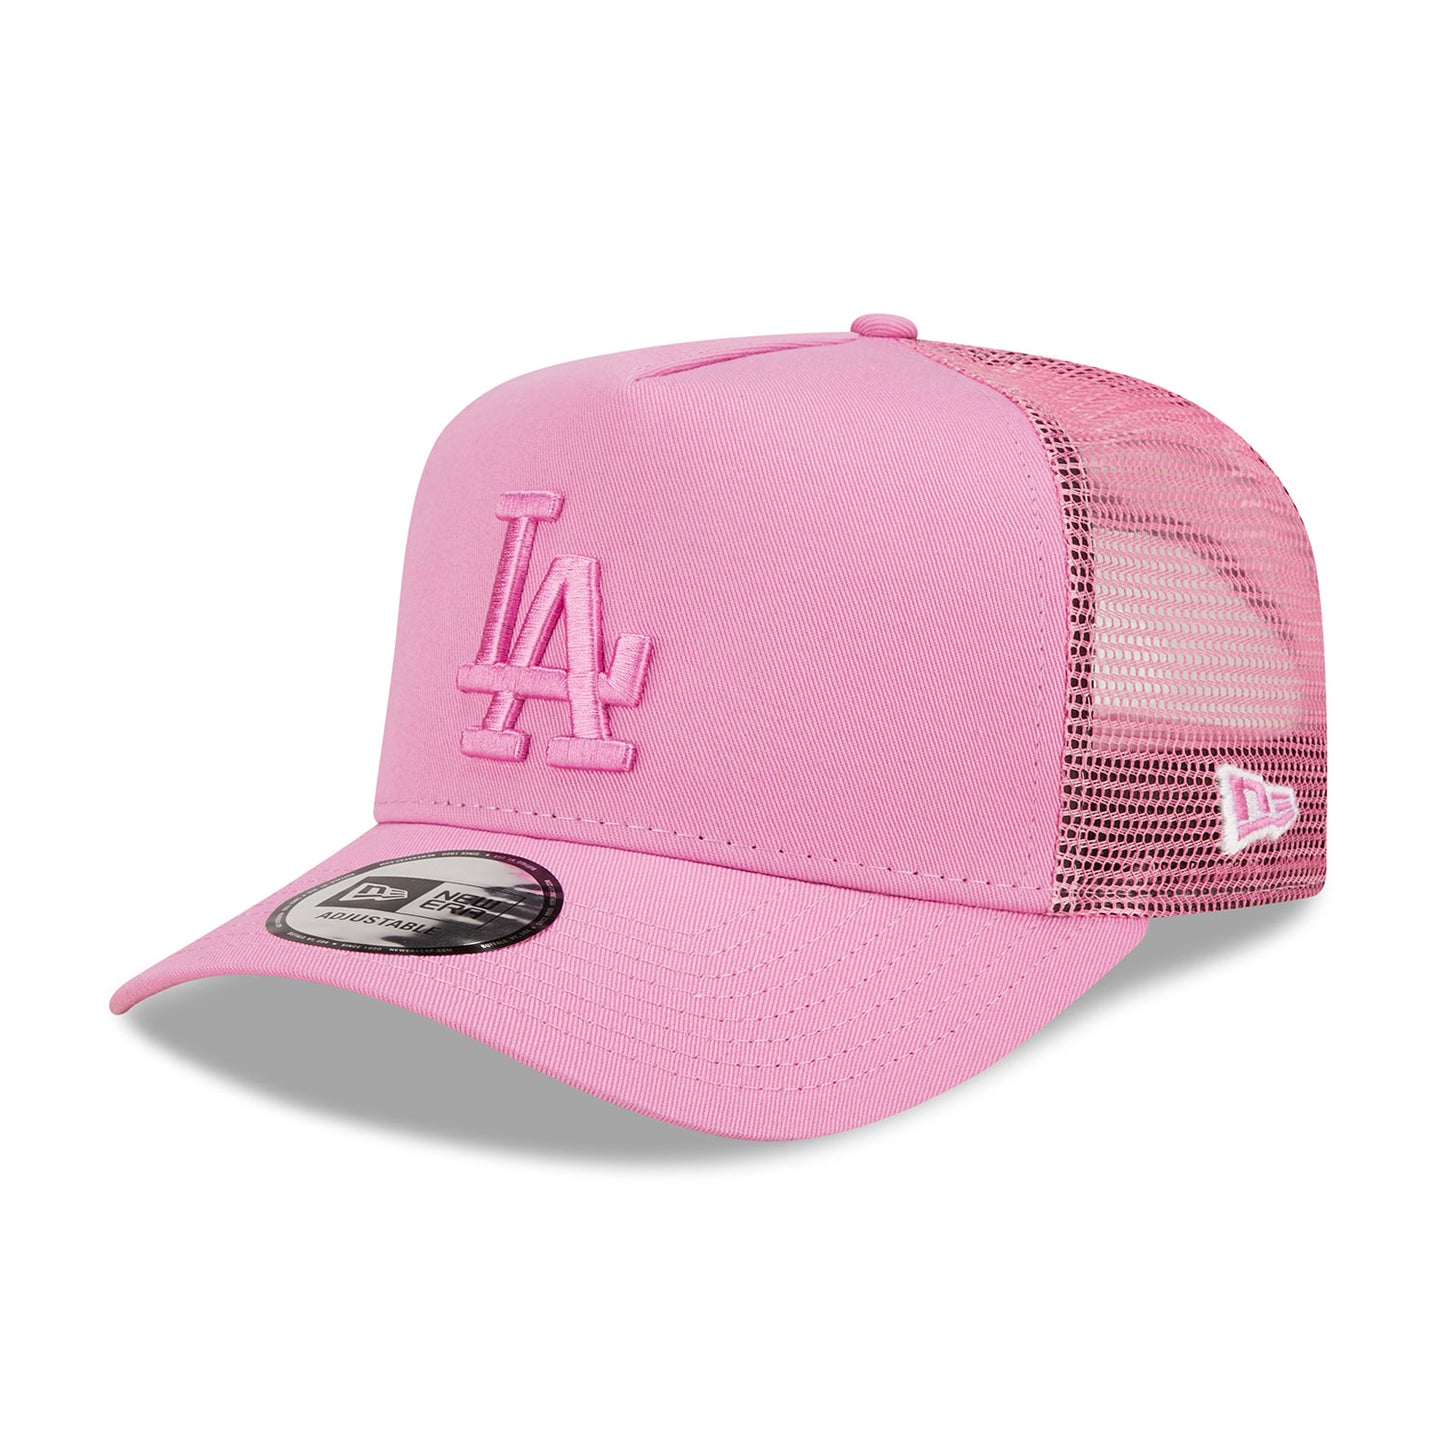 Los Angeles Dodgers New Era Trucker Cap adjustable hot pink